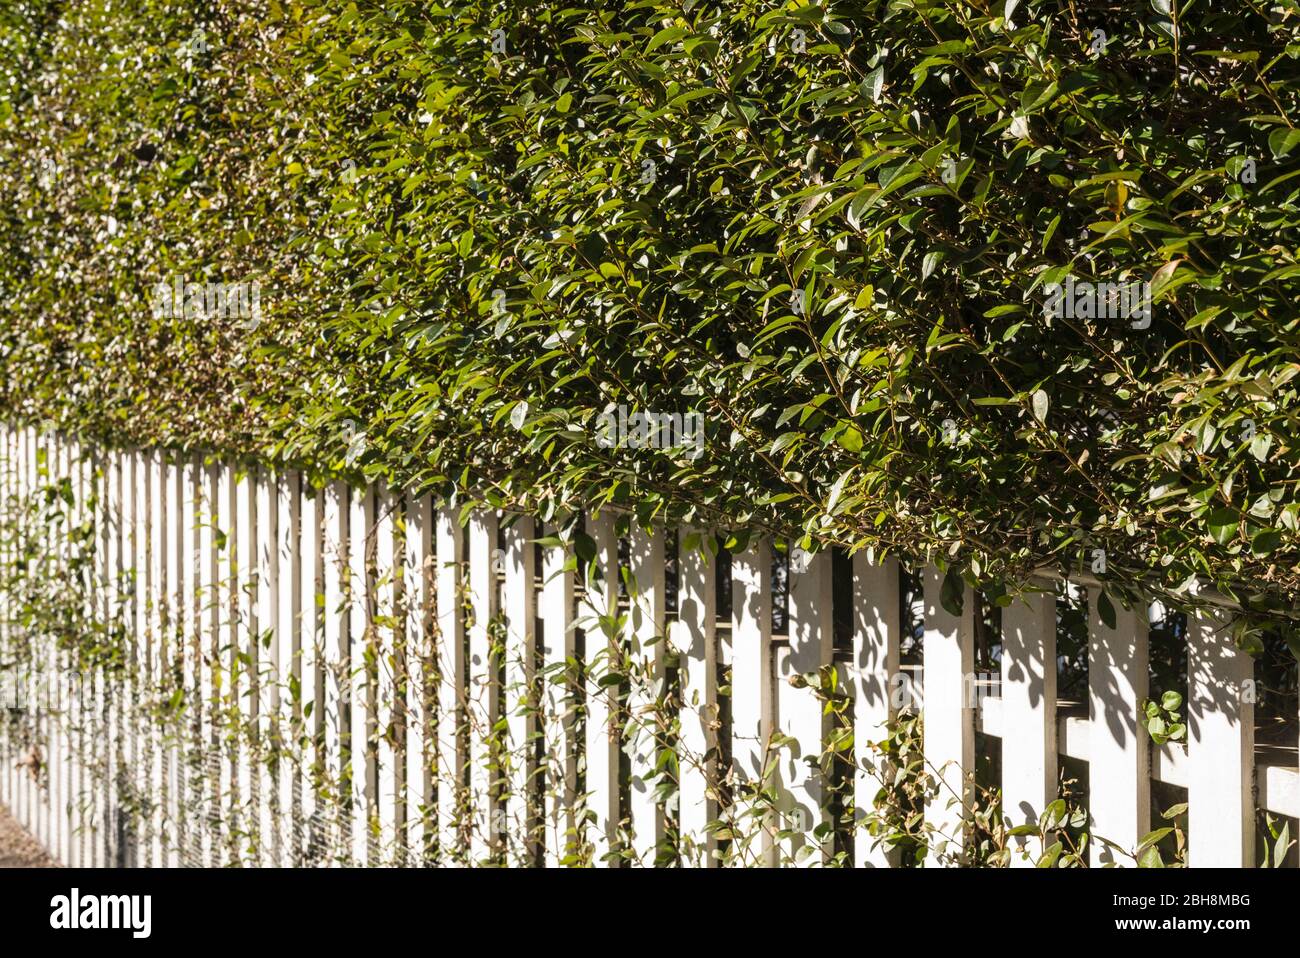 USA, New England, Massachusetts, Nantucket Island, Nantucket Town, fence and shrubs Stock Photo